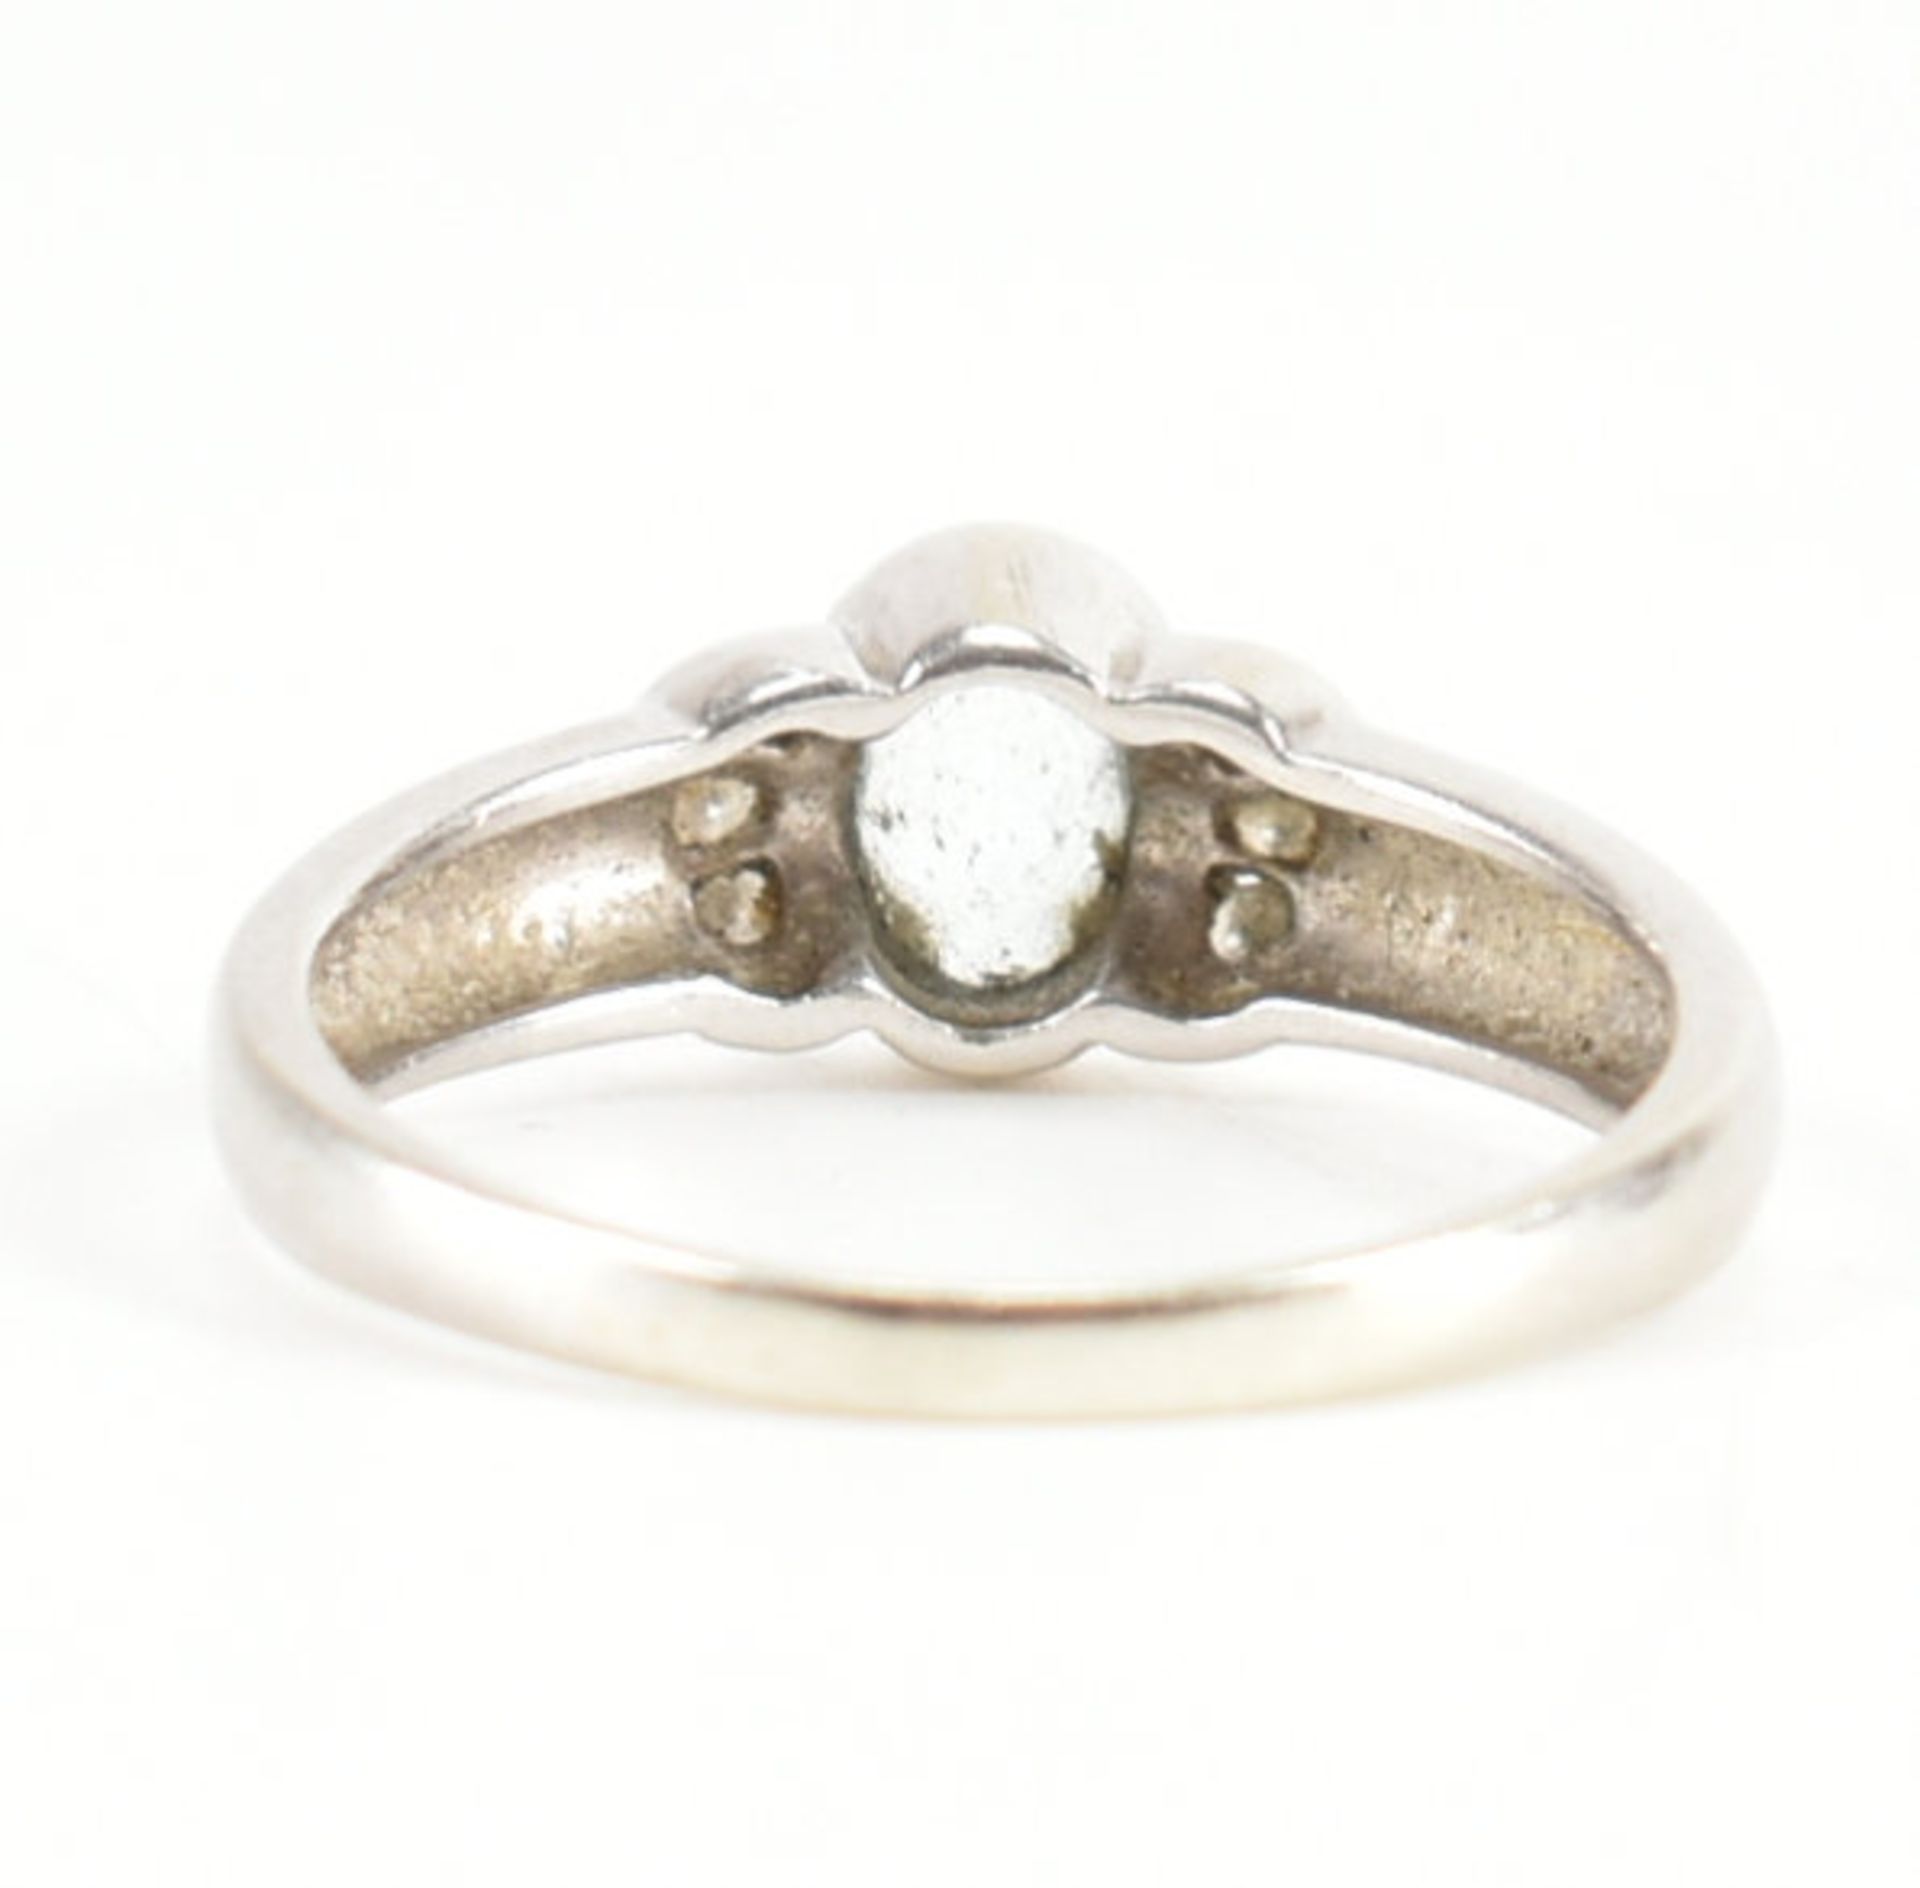 HALLMARKED 9CT WHITE GOLD AQUAMARINE & DIAMOND RING - Image 4 of 10